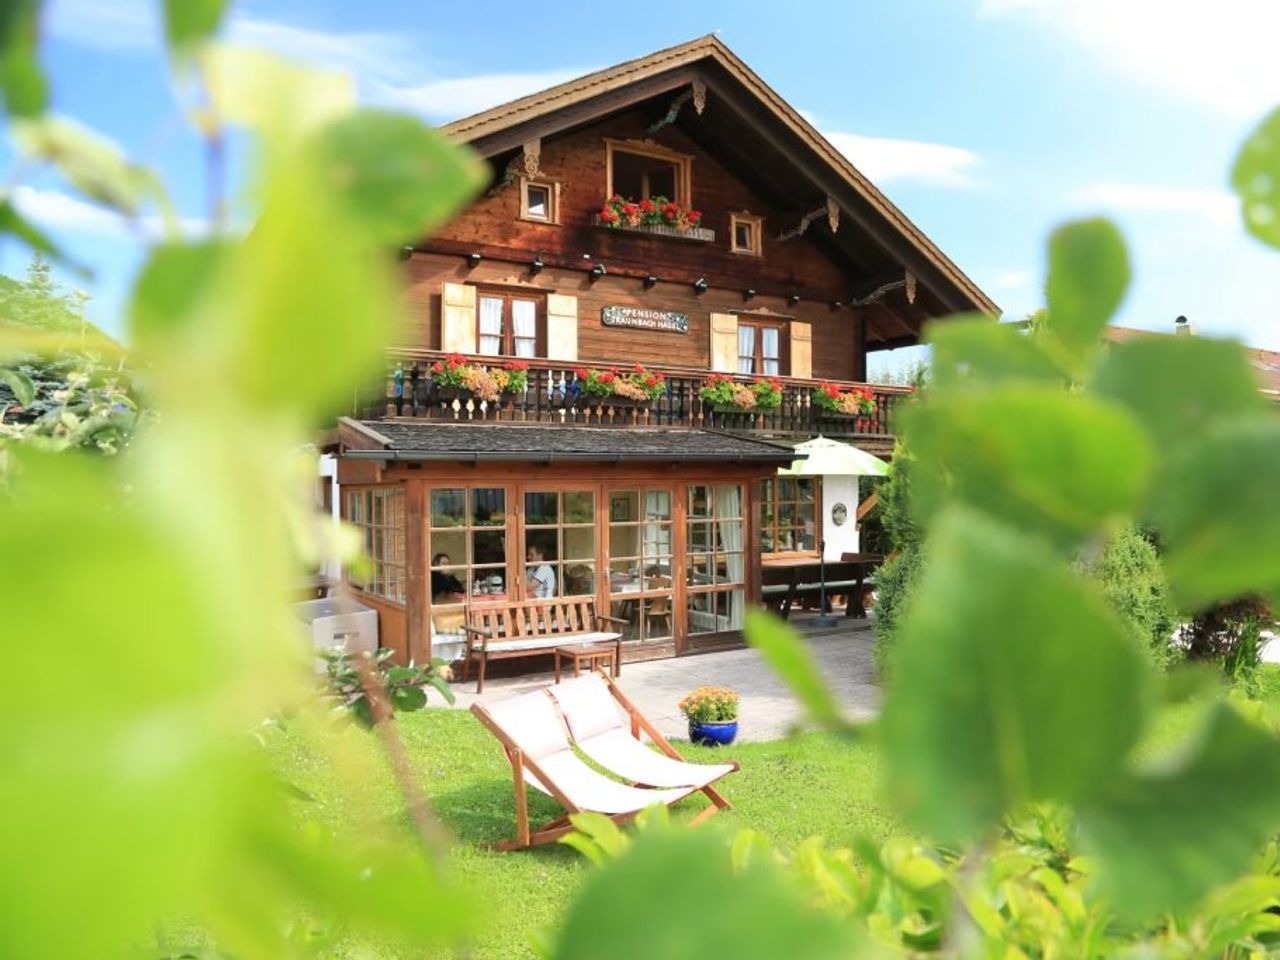 5 Tage Quad-Abenteuer und Landhausidylle im Chiemgau